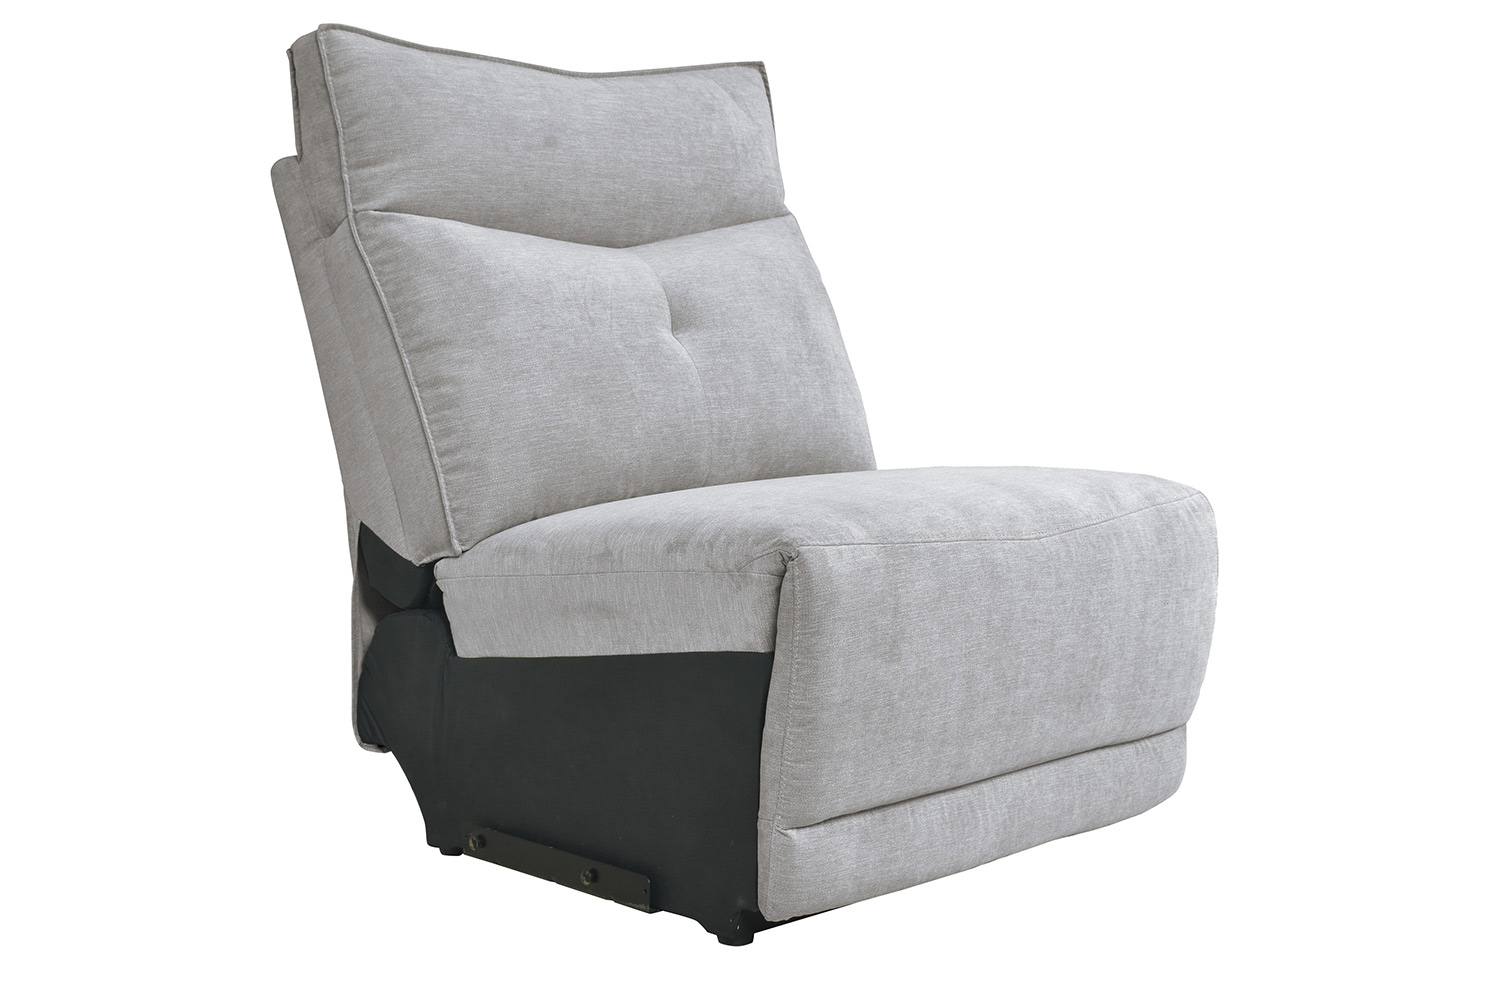 Homelegance Tesoro Armless Chair - Mist Gray